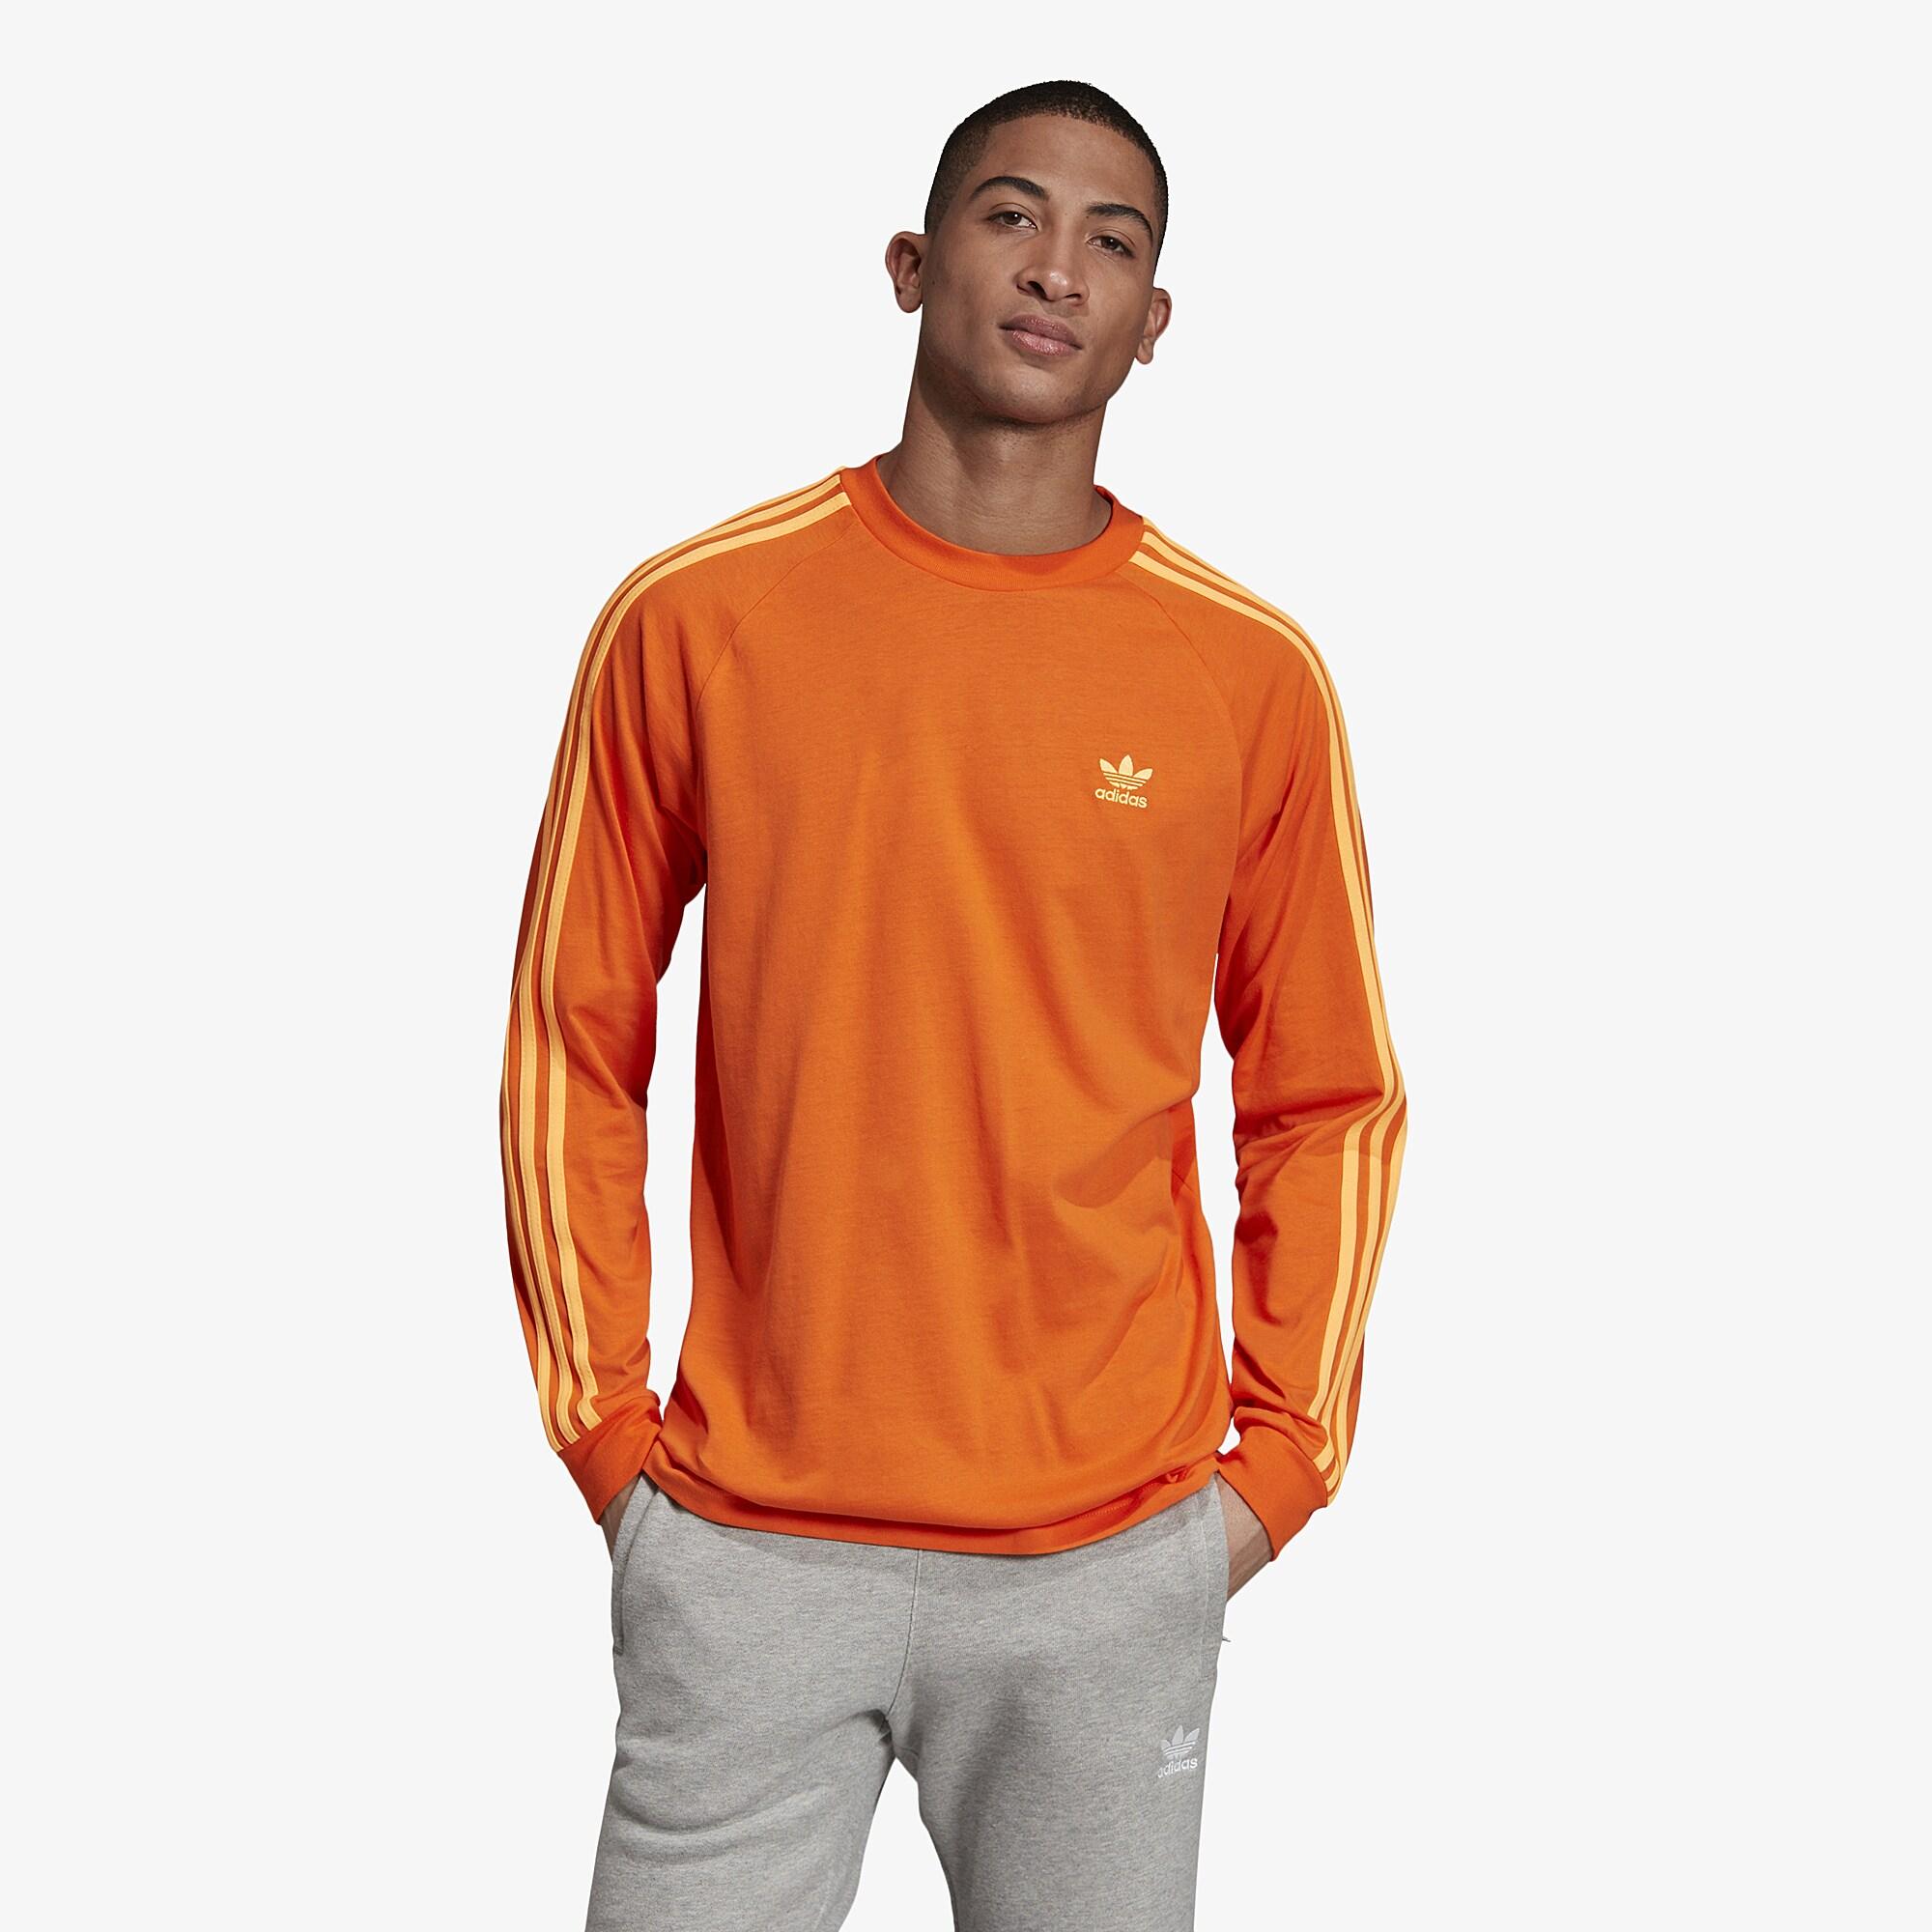 adidas Originals Cotton 3-stripes Long-sleeve Top in Orange for Men - Lyst